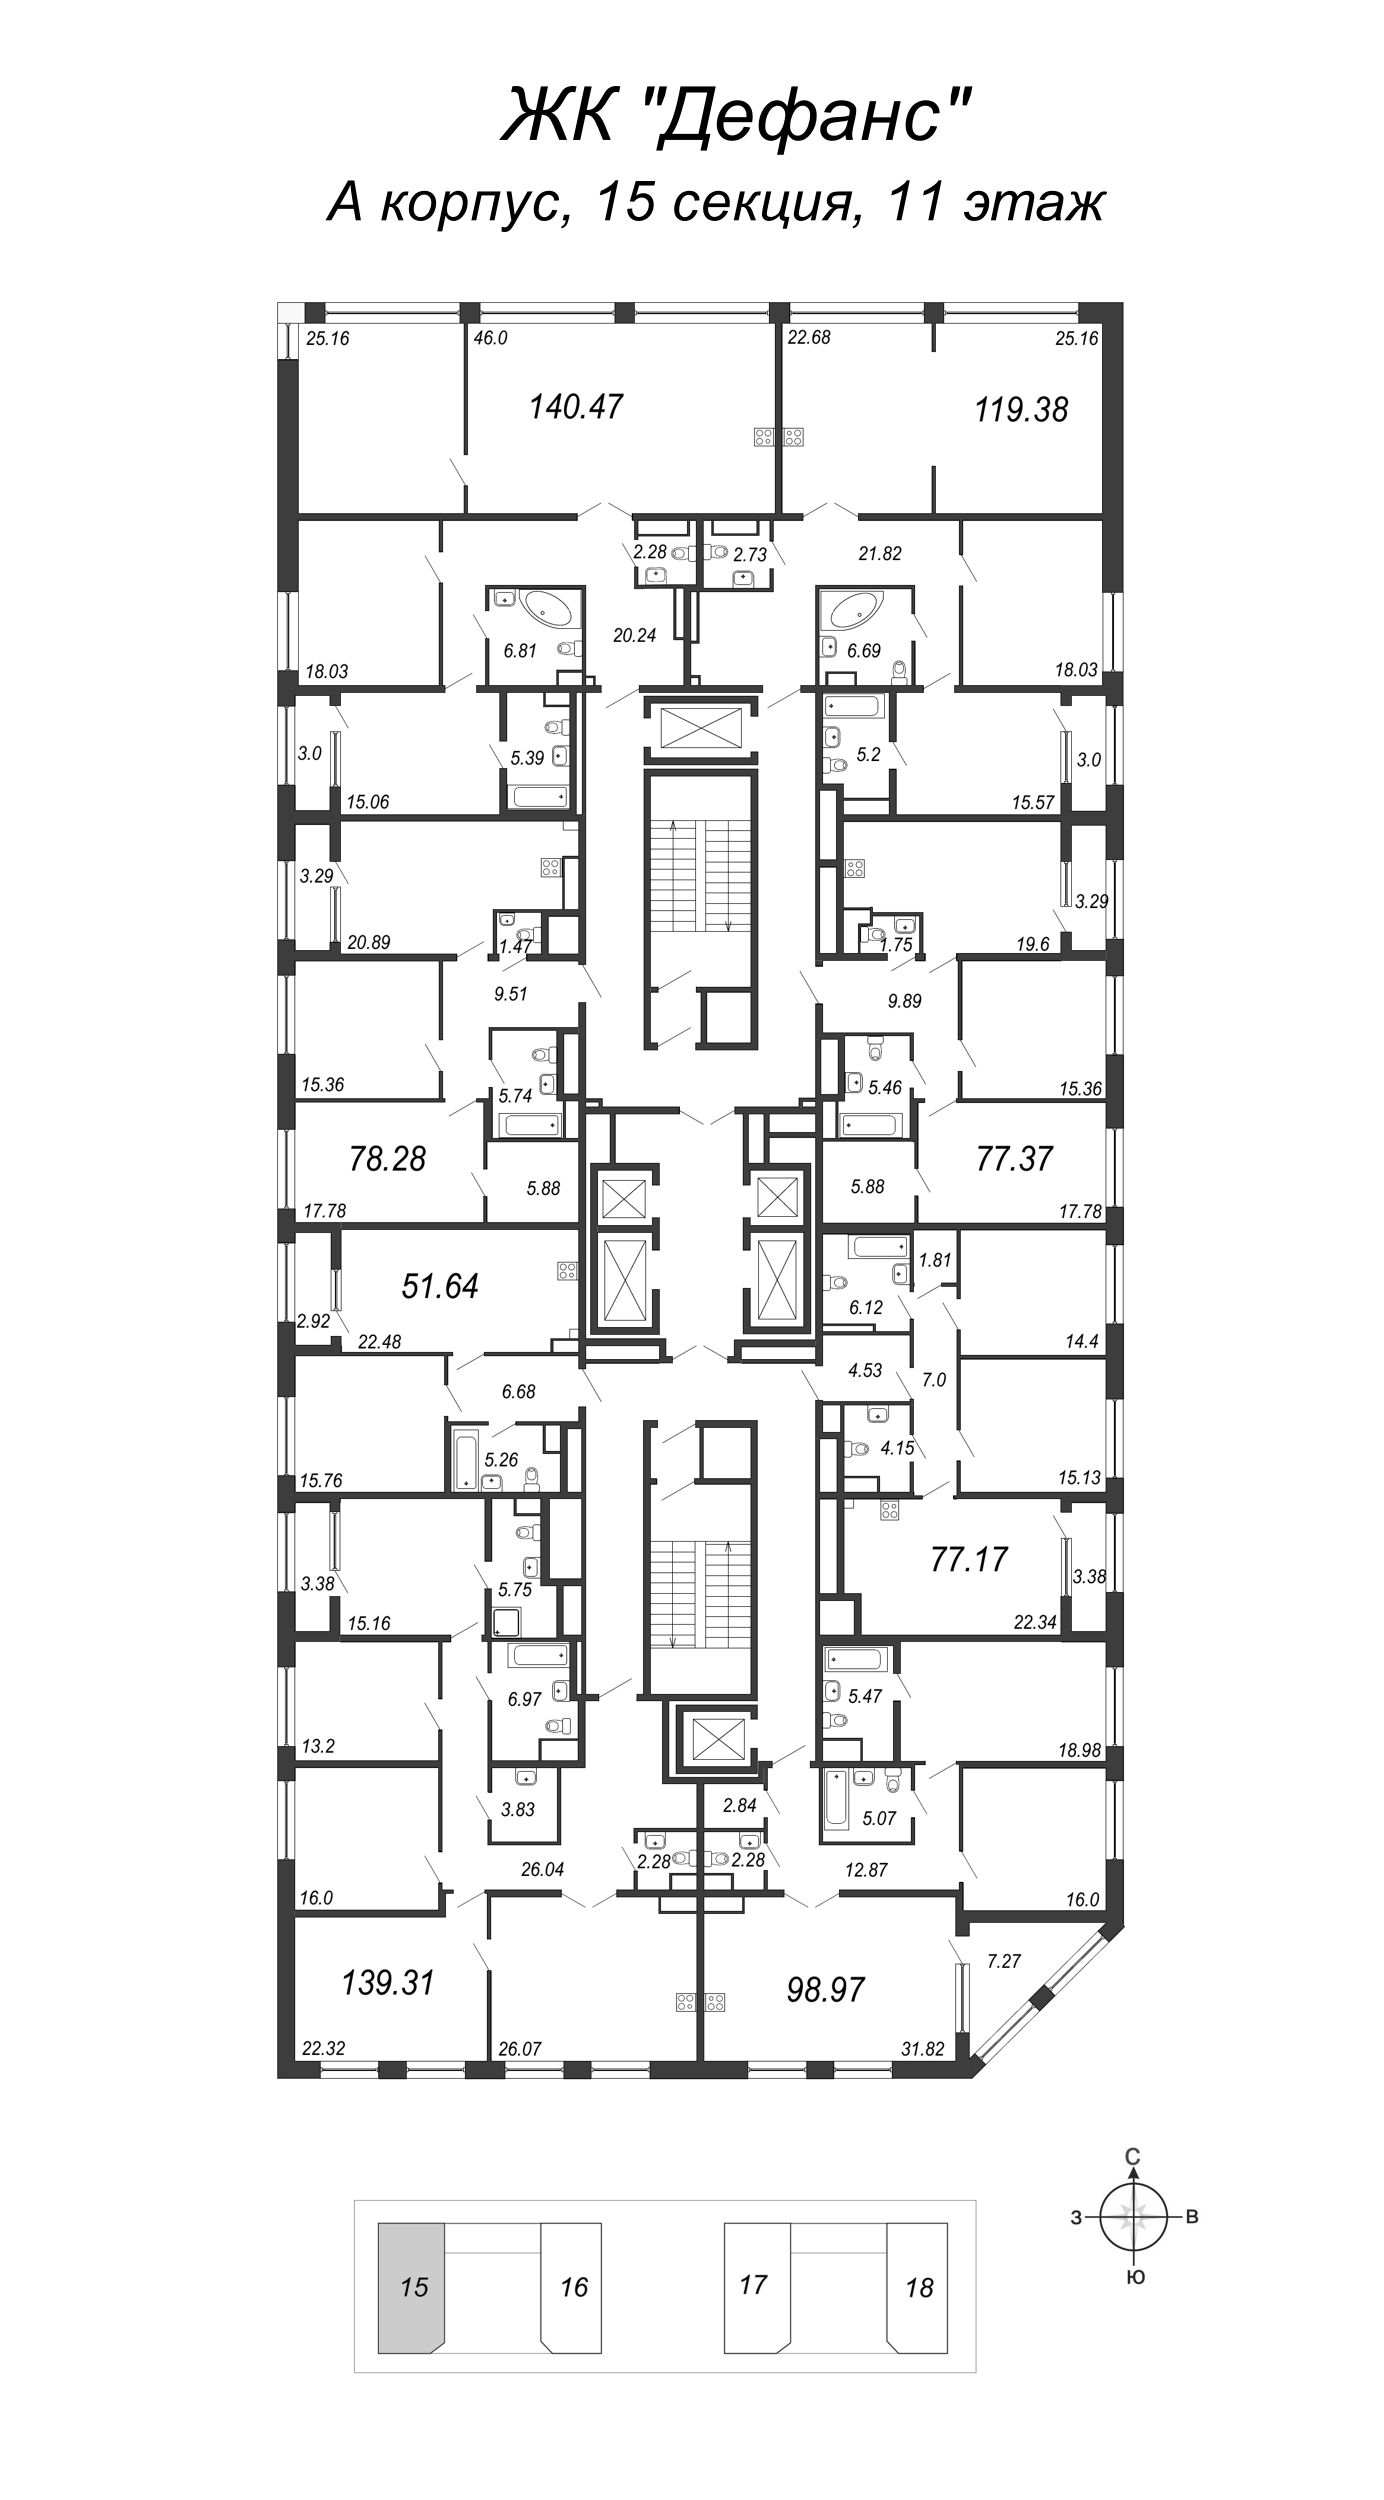 5-комнатная (Евро) квартира, 139.31 м² - планировка этажа